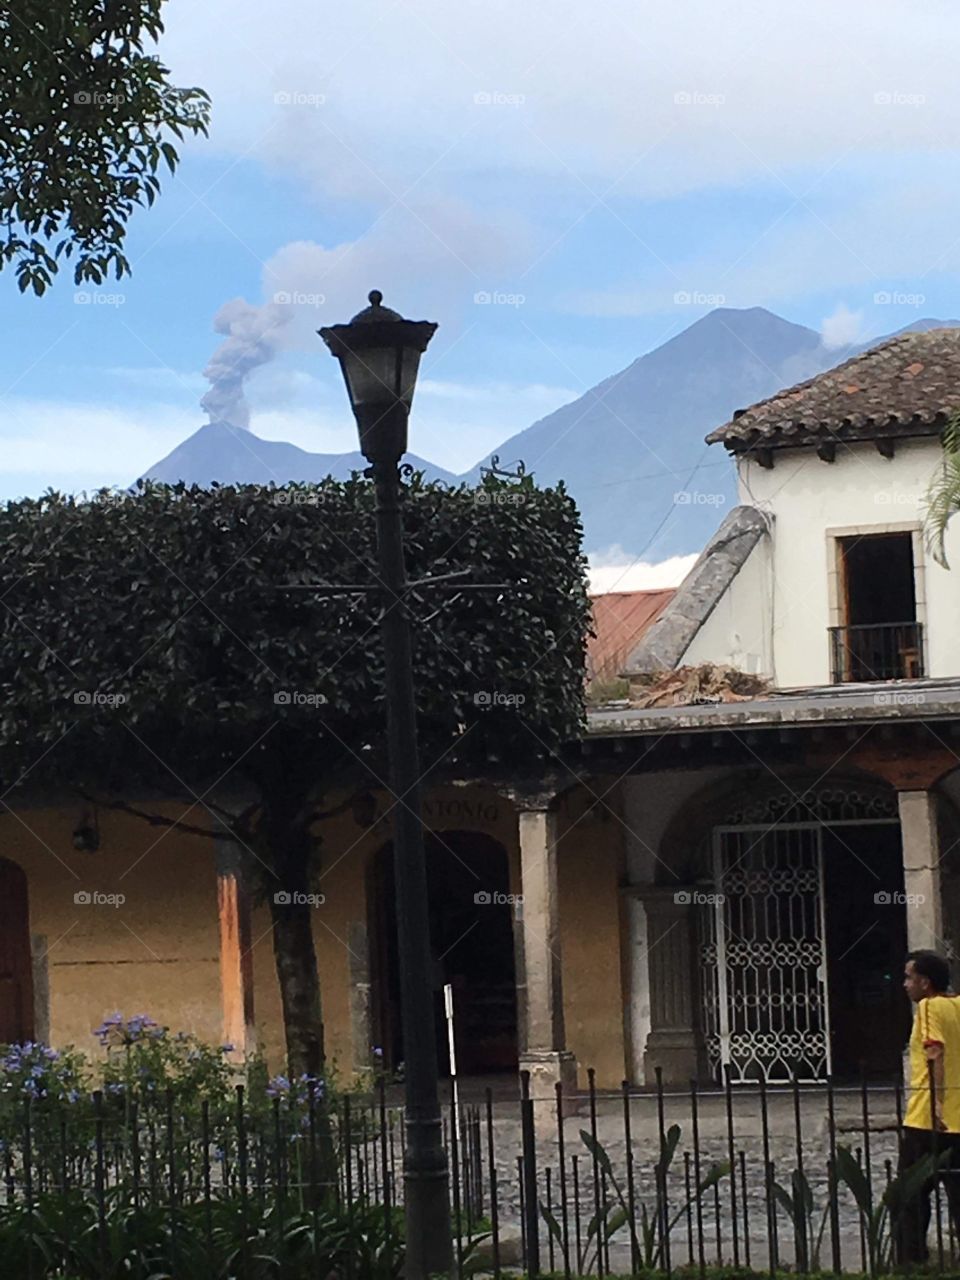 Guatemala, Volcano Fuego Smoking and a architectural church building